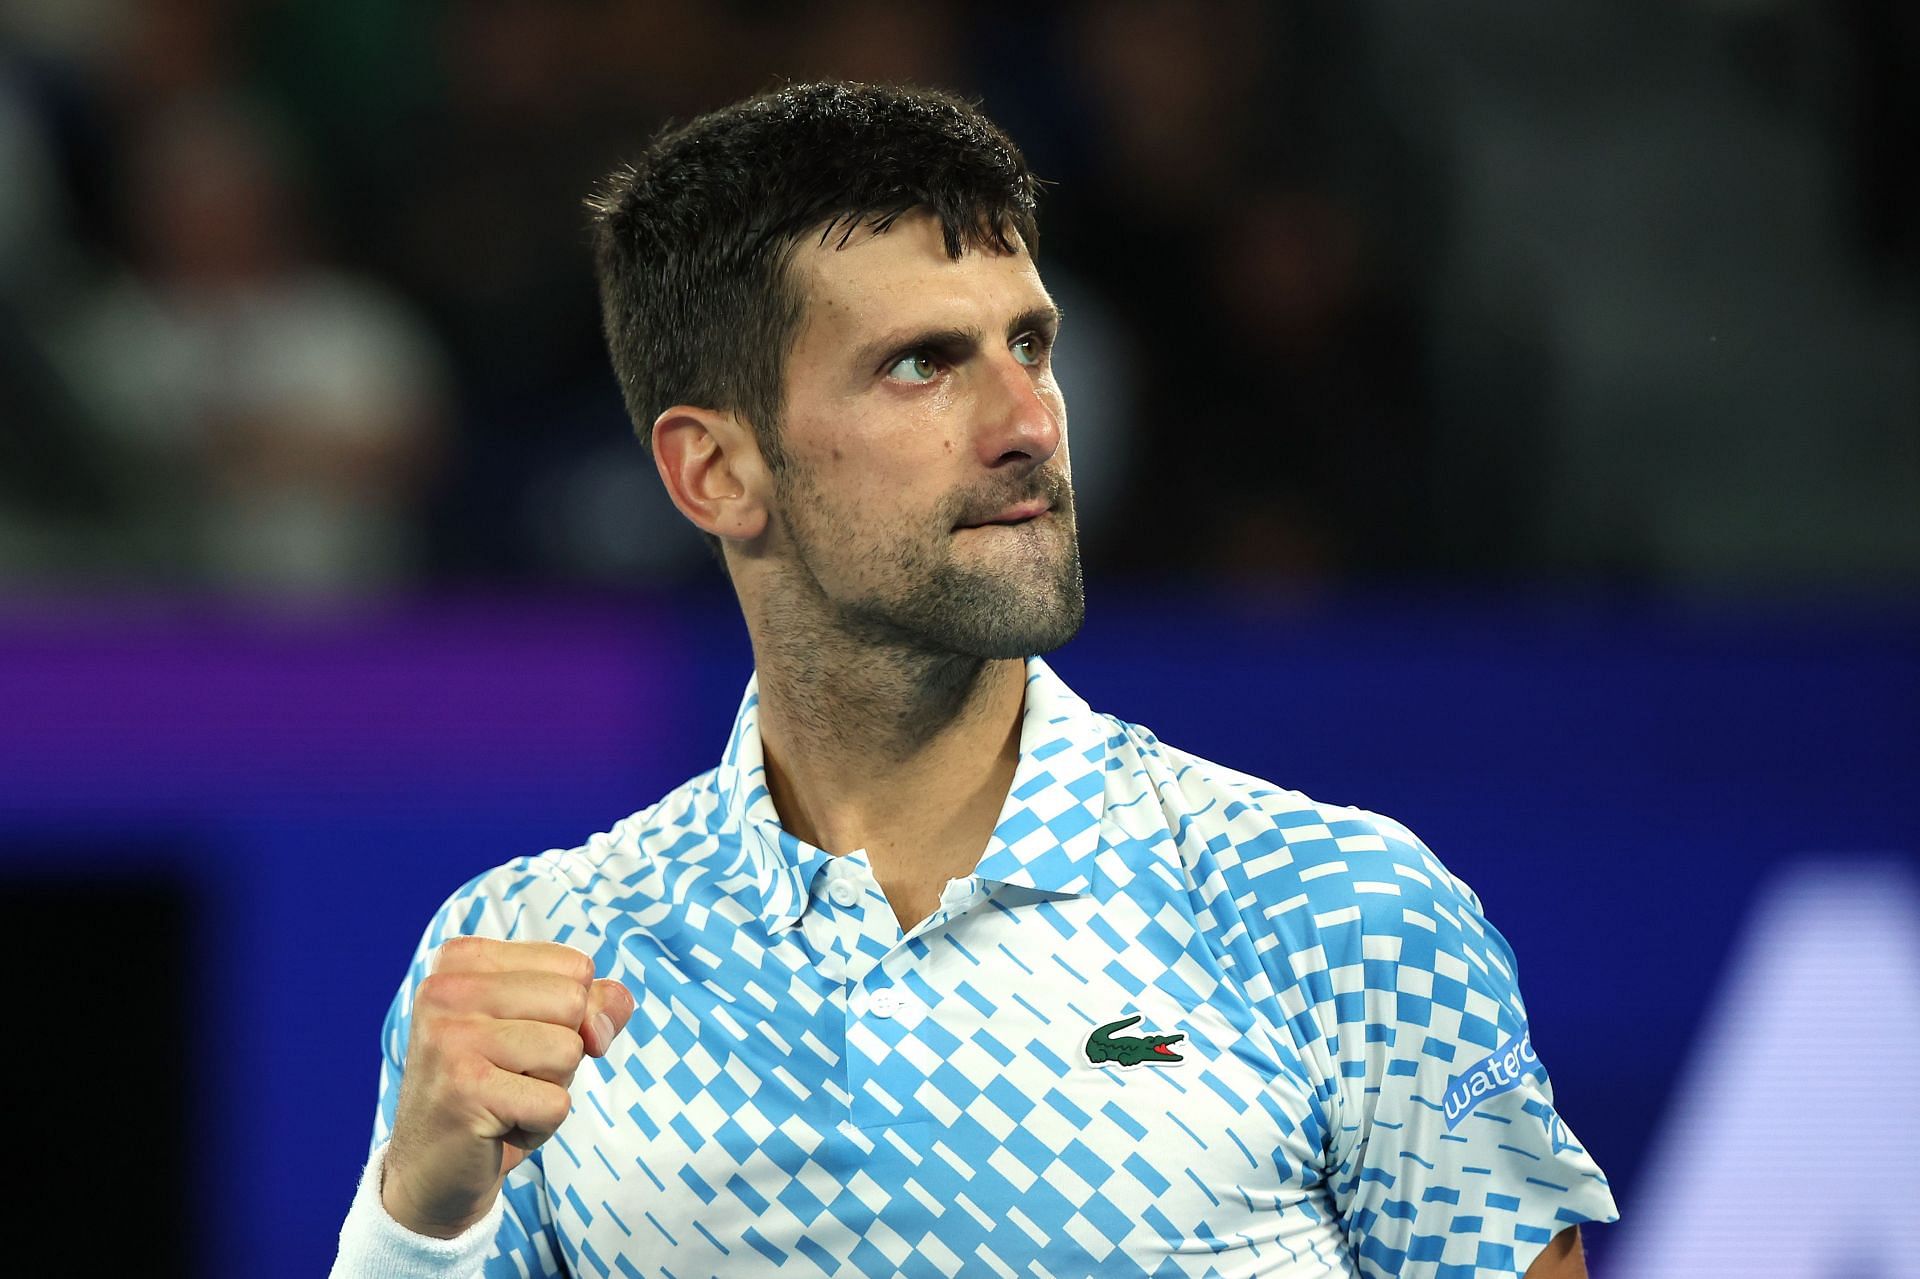 Novak Djokovic pictured at the 2023 Australian Open - Day 10.